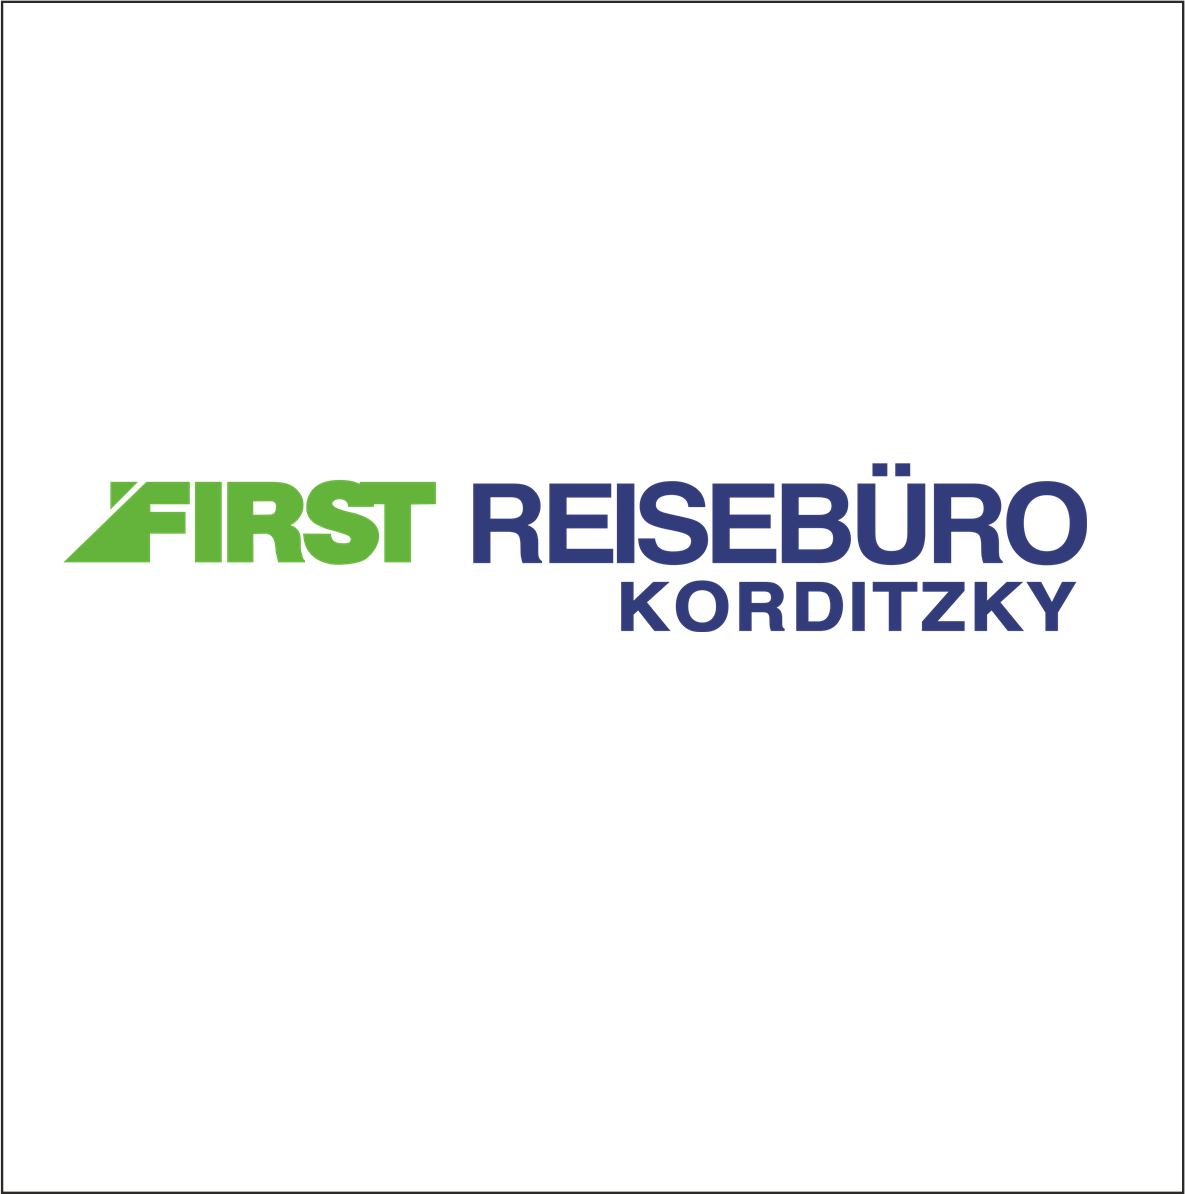 Reisebüro Korditzky